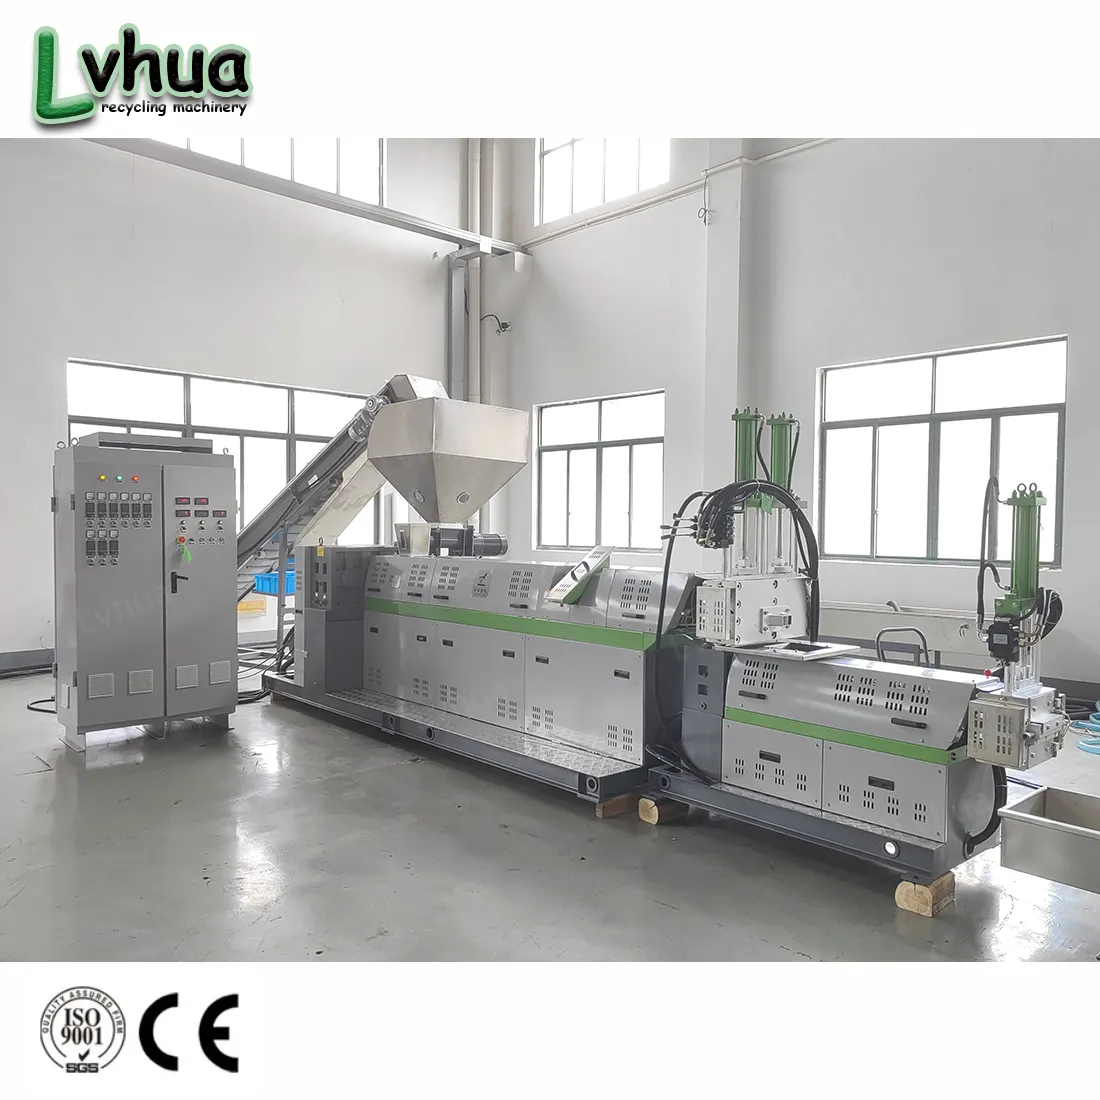 Lvhua Economische Plastic Pellet Machine Plastic Pellet Extruder Machine Plastic Recycling Machine